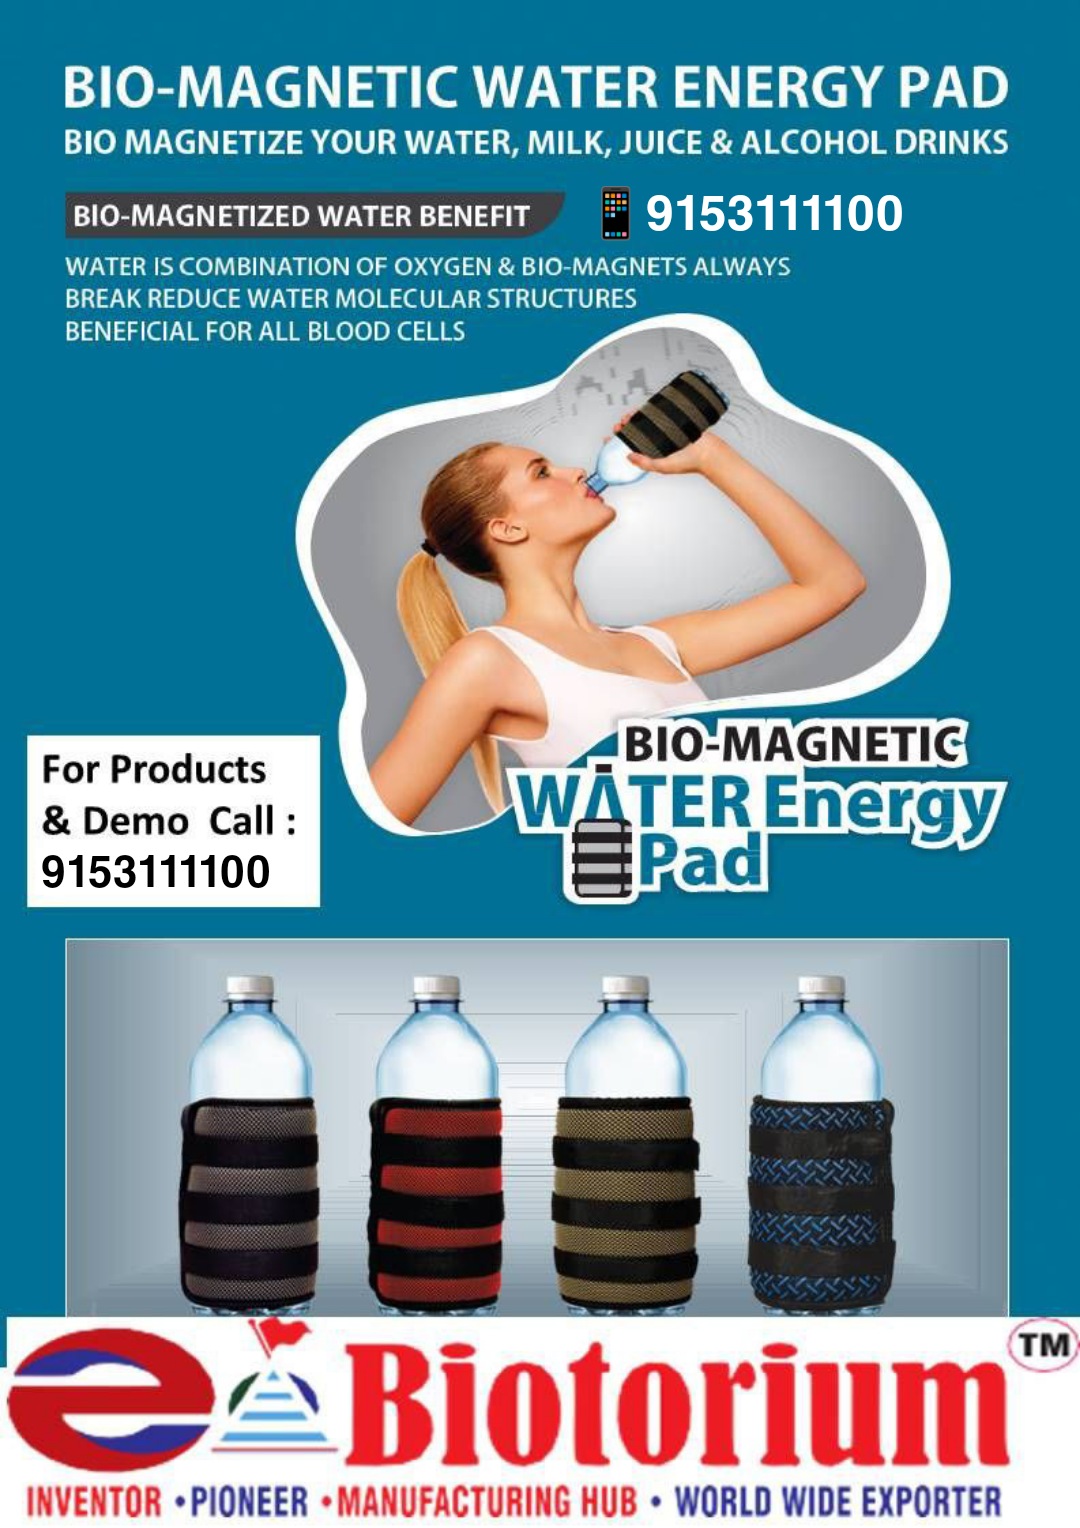 e-Biotorium Bio Magnetic Water Energy Pad